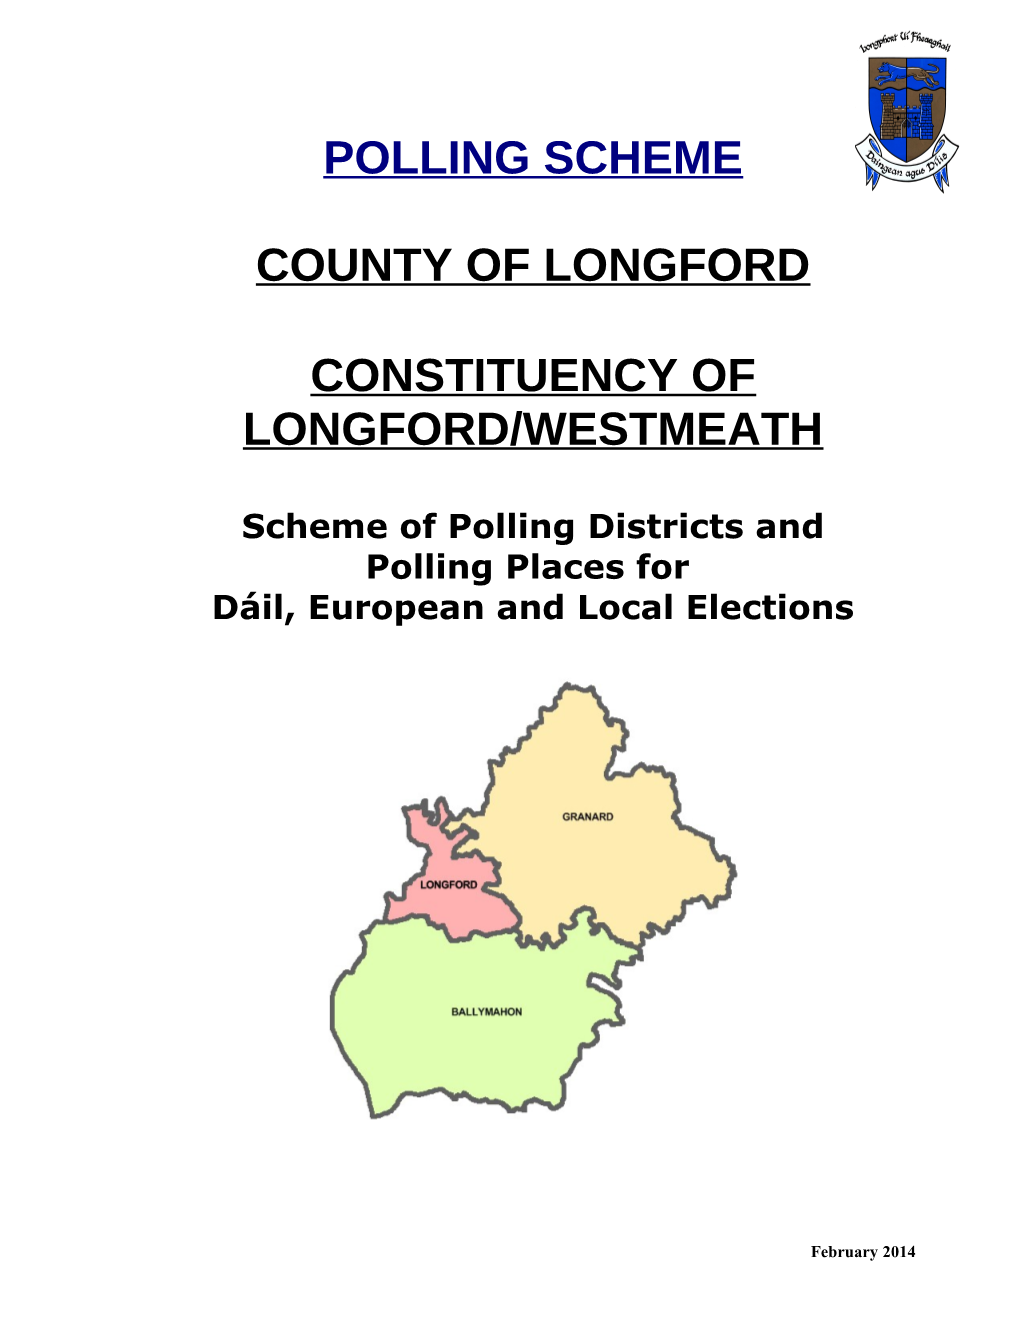 County of Longford